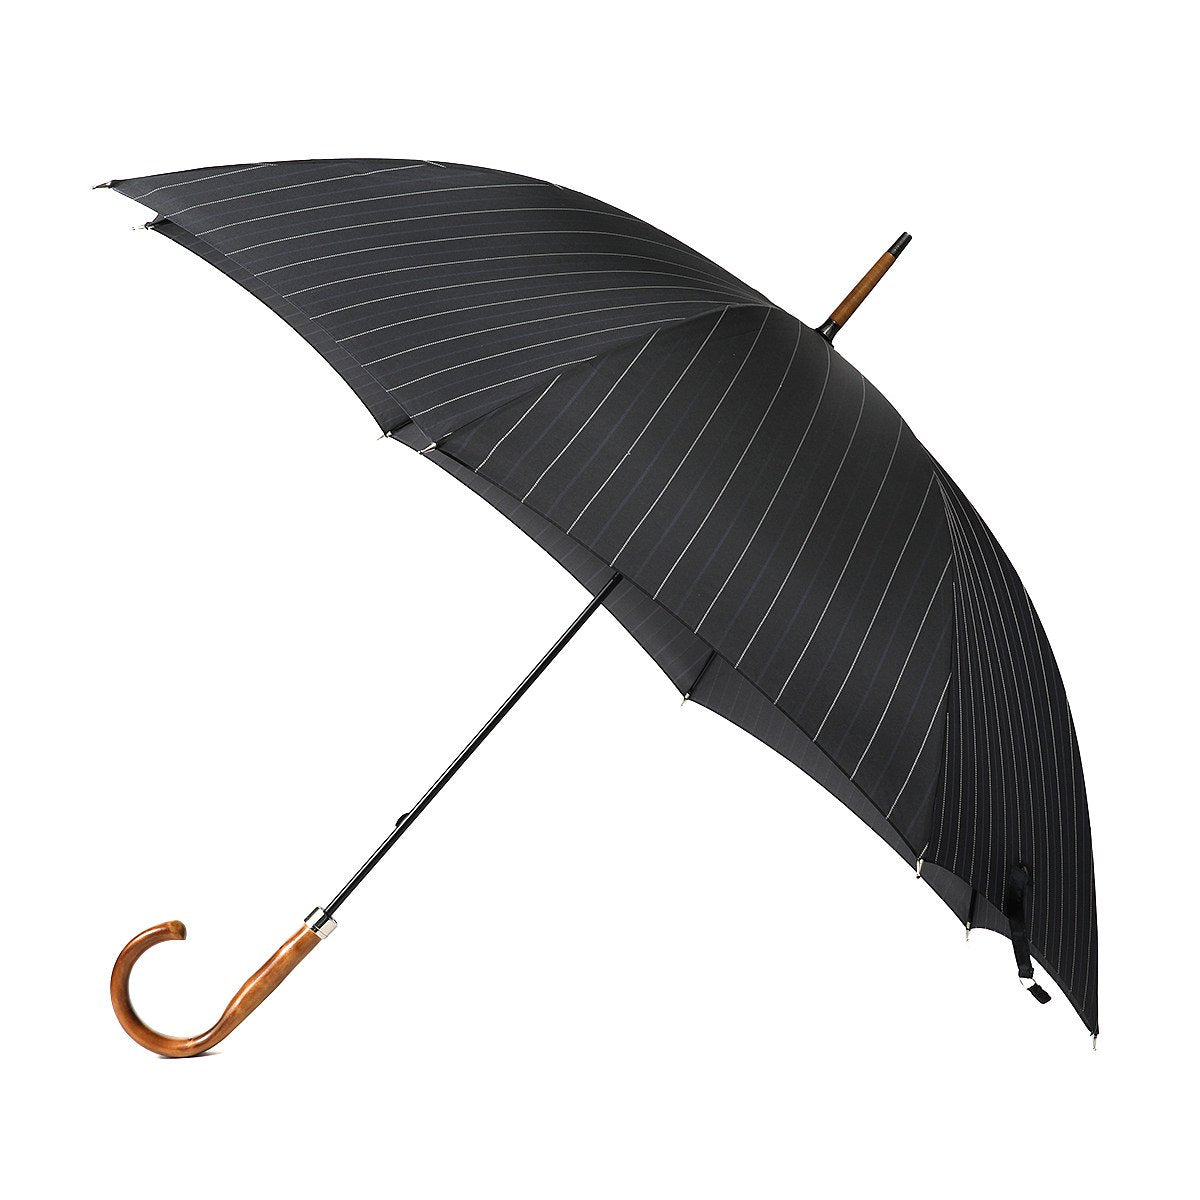 Alternate Stripe Thin Winding Long Umbrella